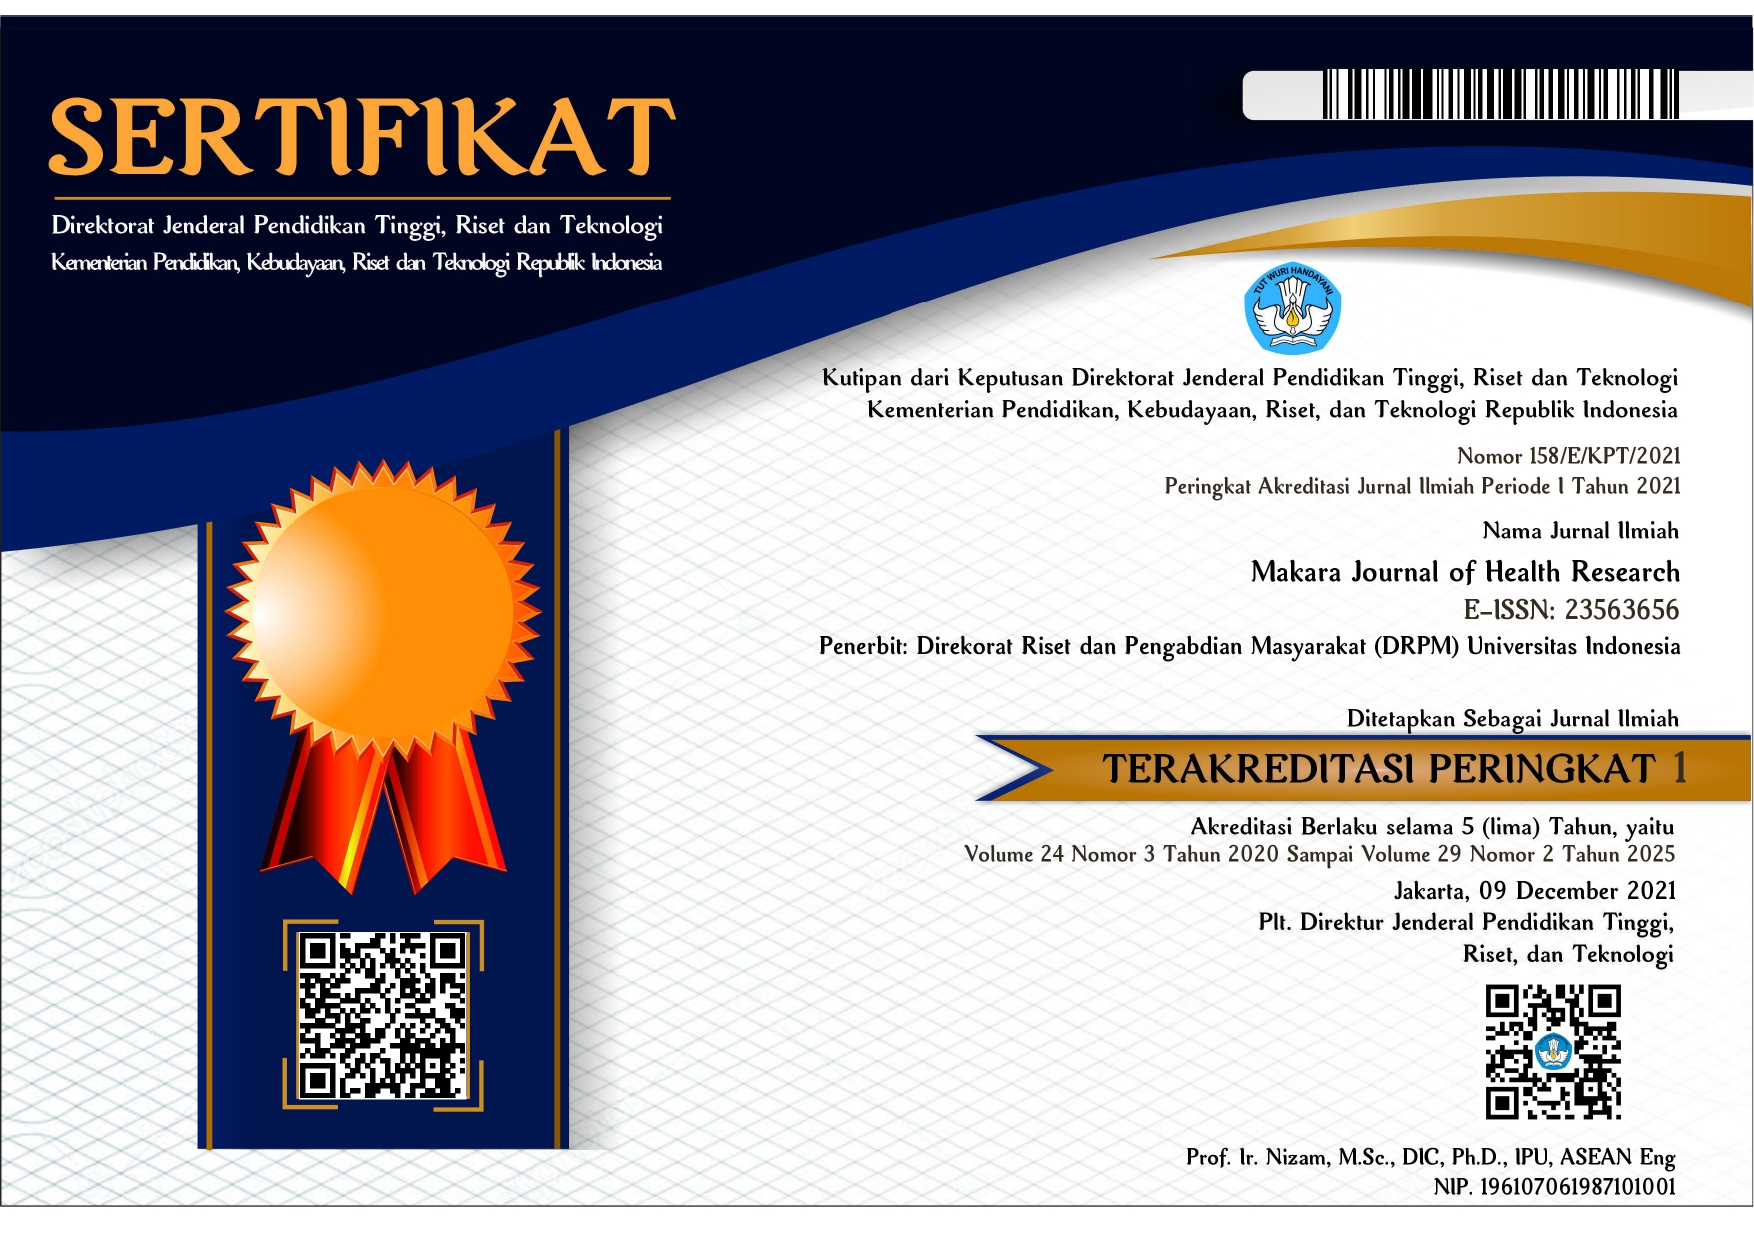 MJHR National Accreditation Certificate 2020-2025